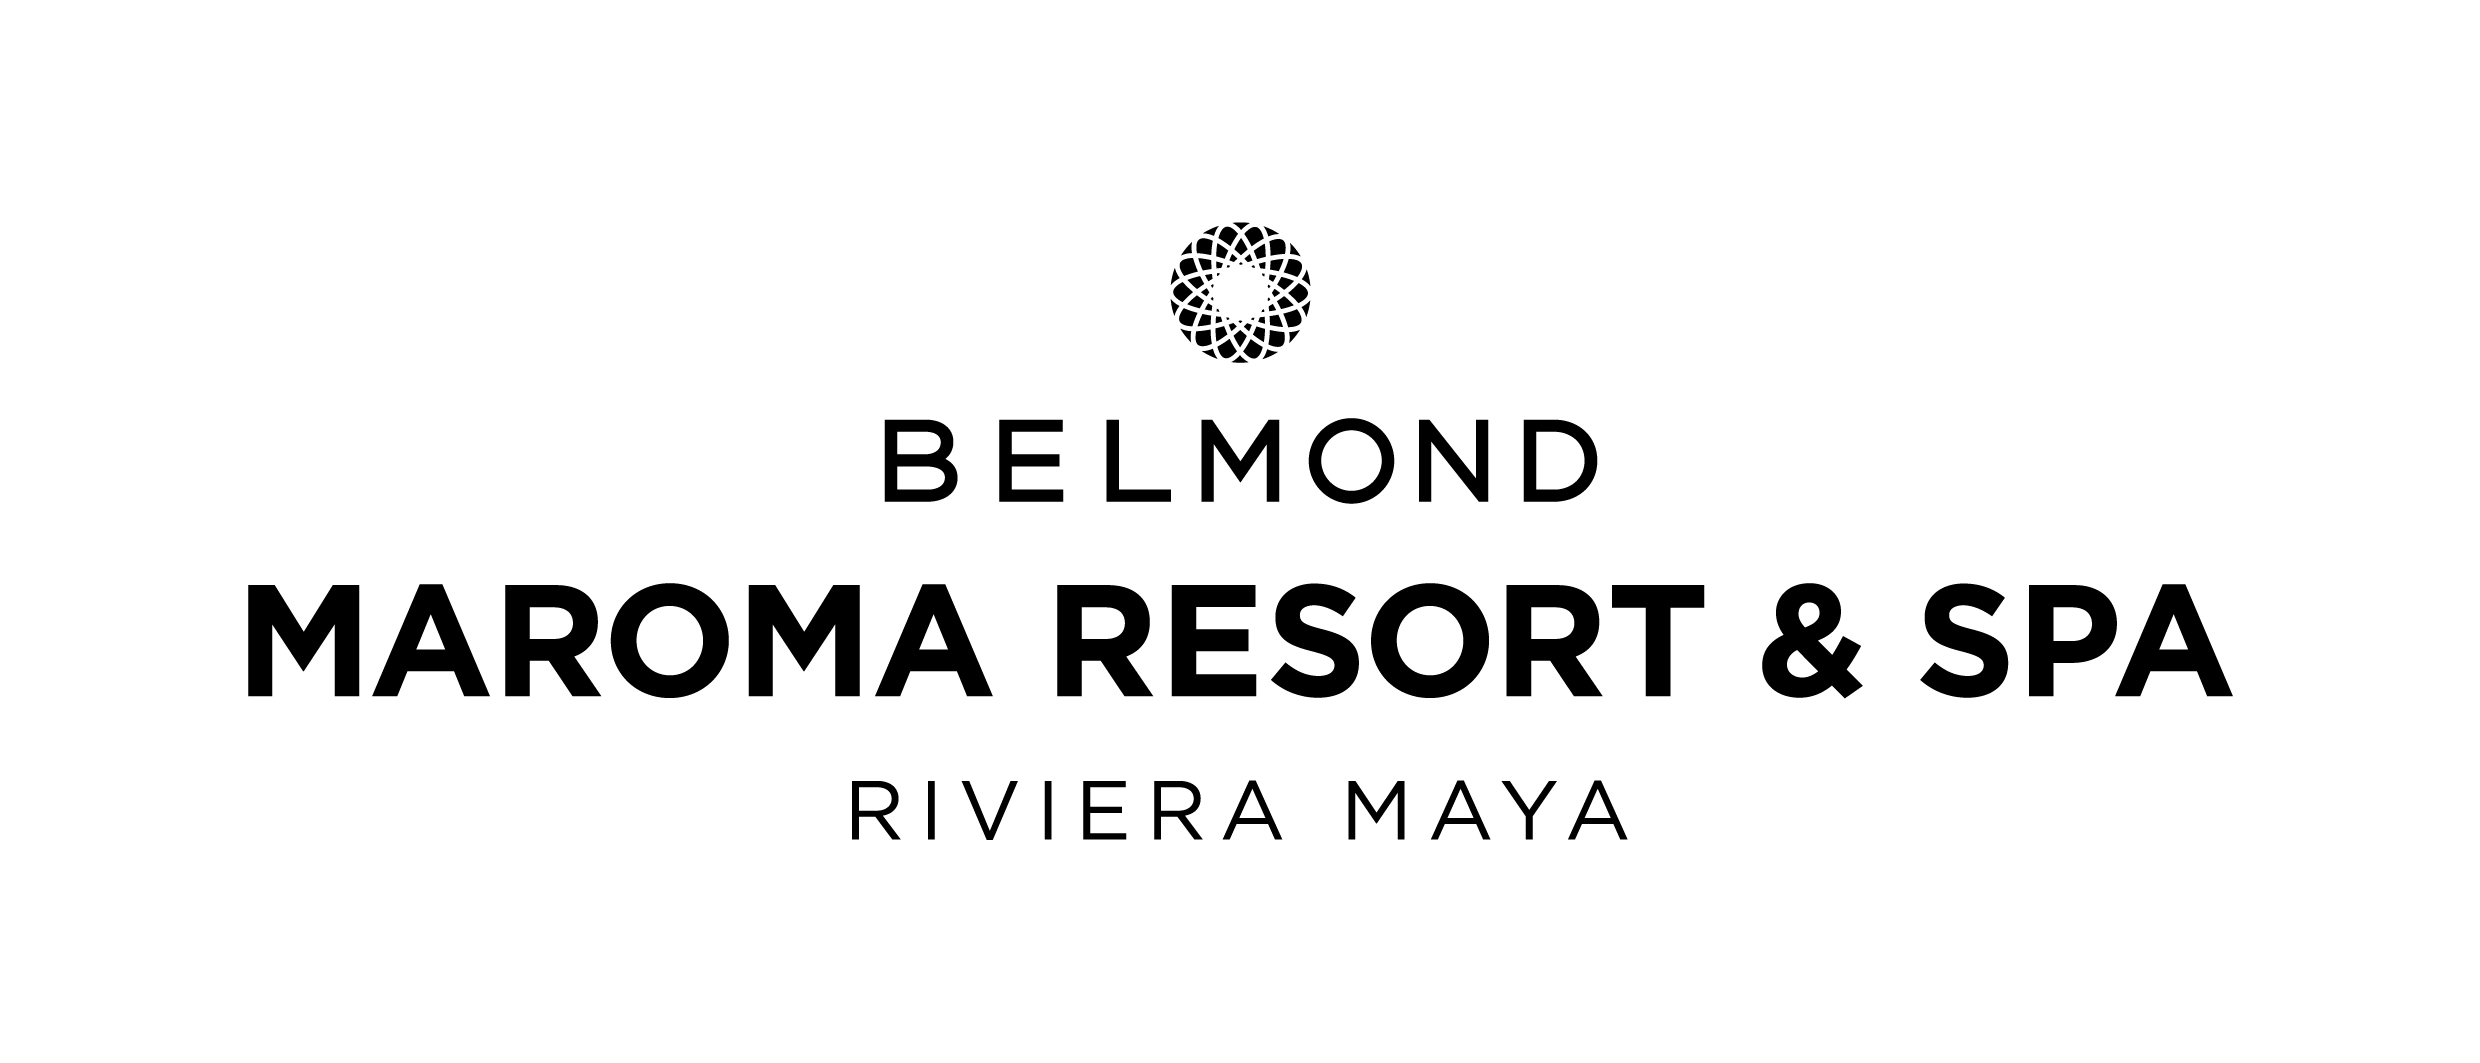 Belmond Maroma Resort & Spa Logo